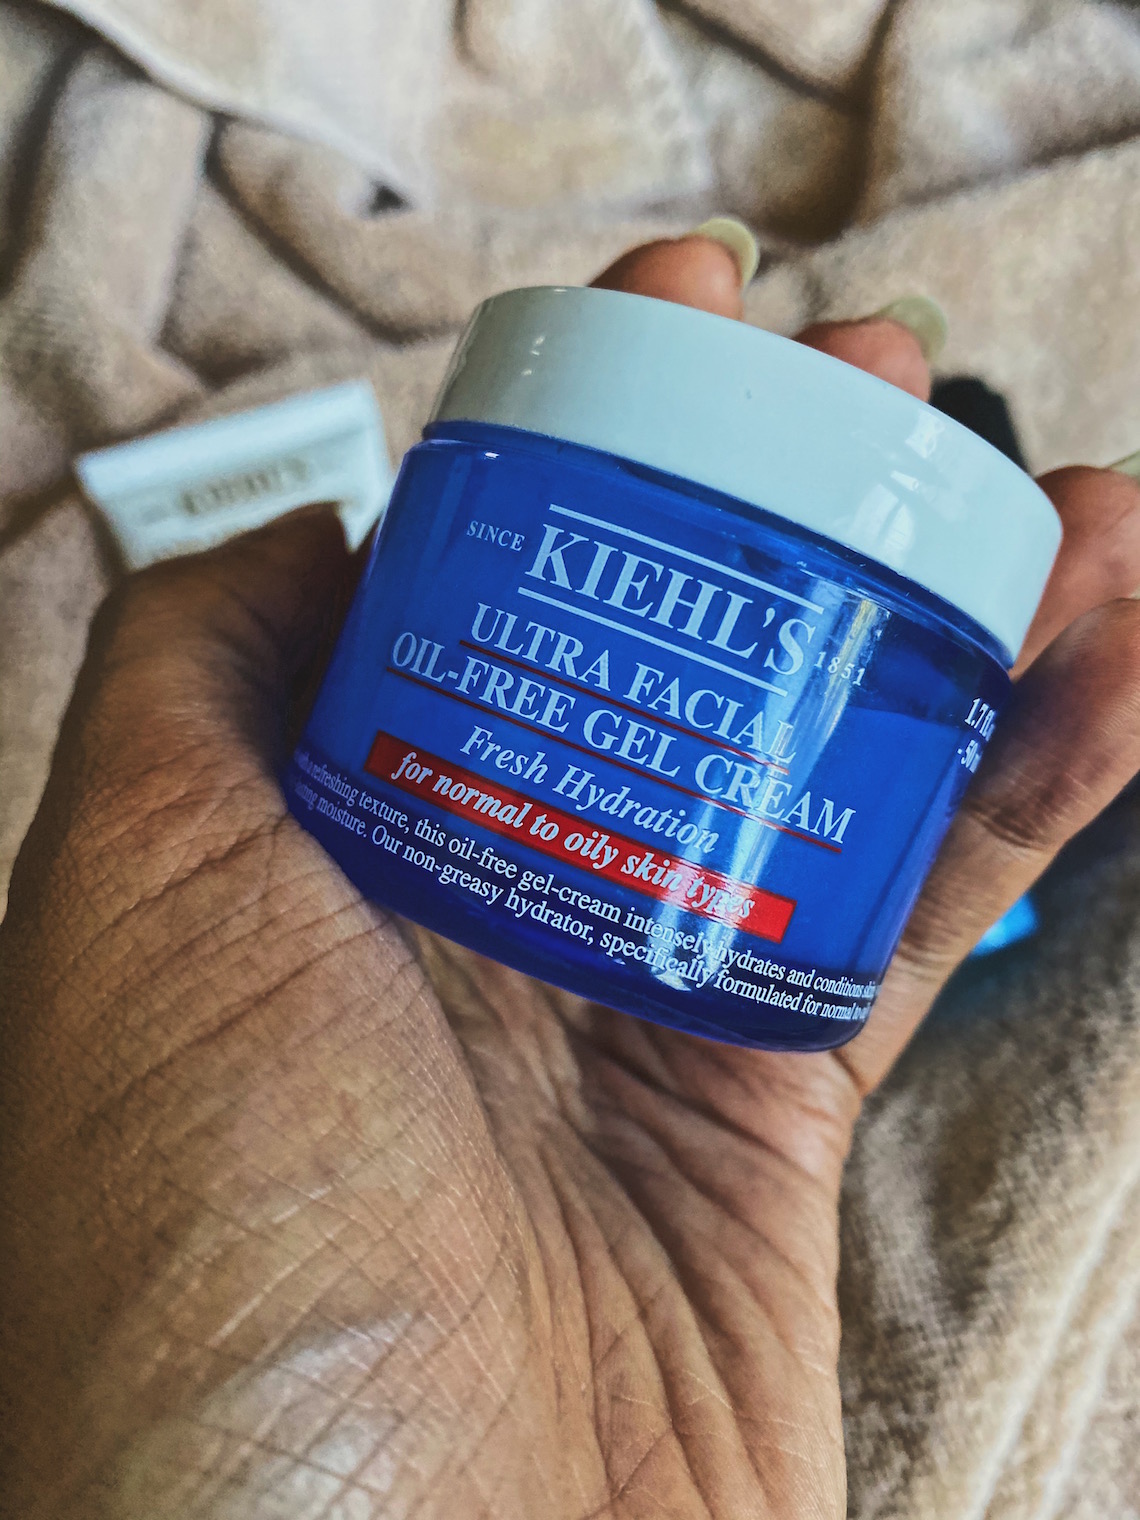 kiehls ultra facial oil free gel cream-moisturizer